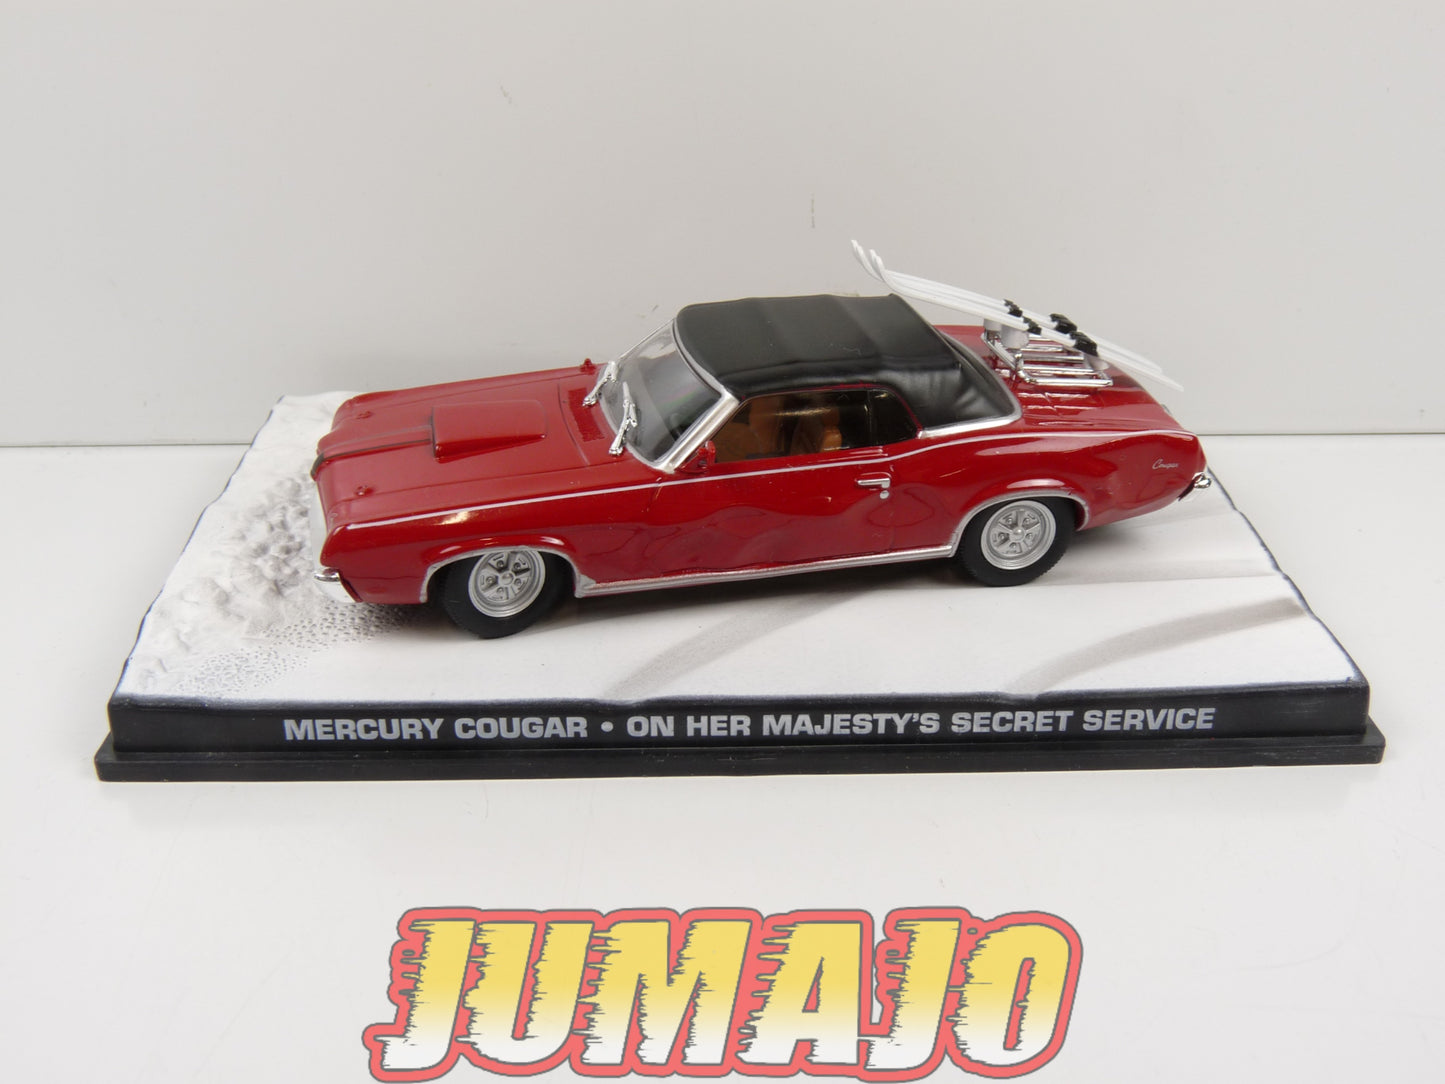 JB21 voiture 1/43 IXO altaya 007 JAMES BOND : Mercury Cougar On her majesty's secret service